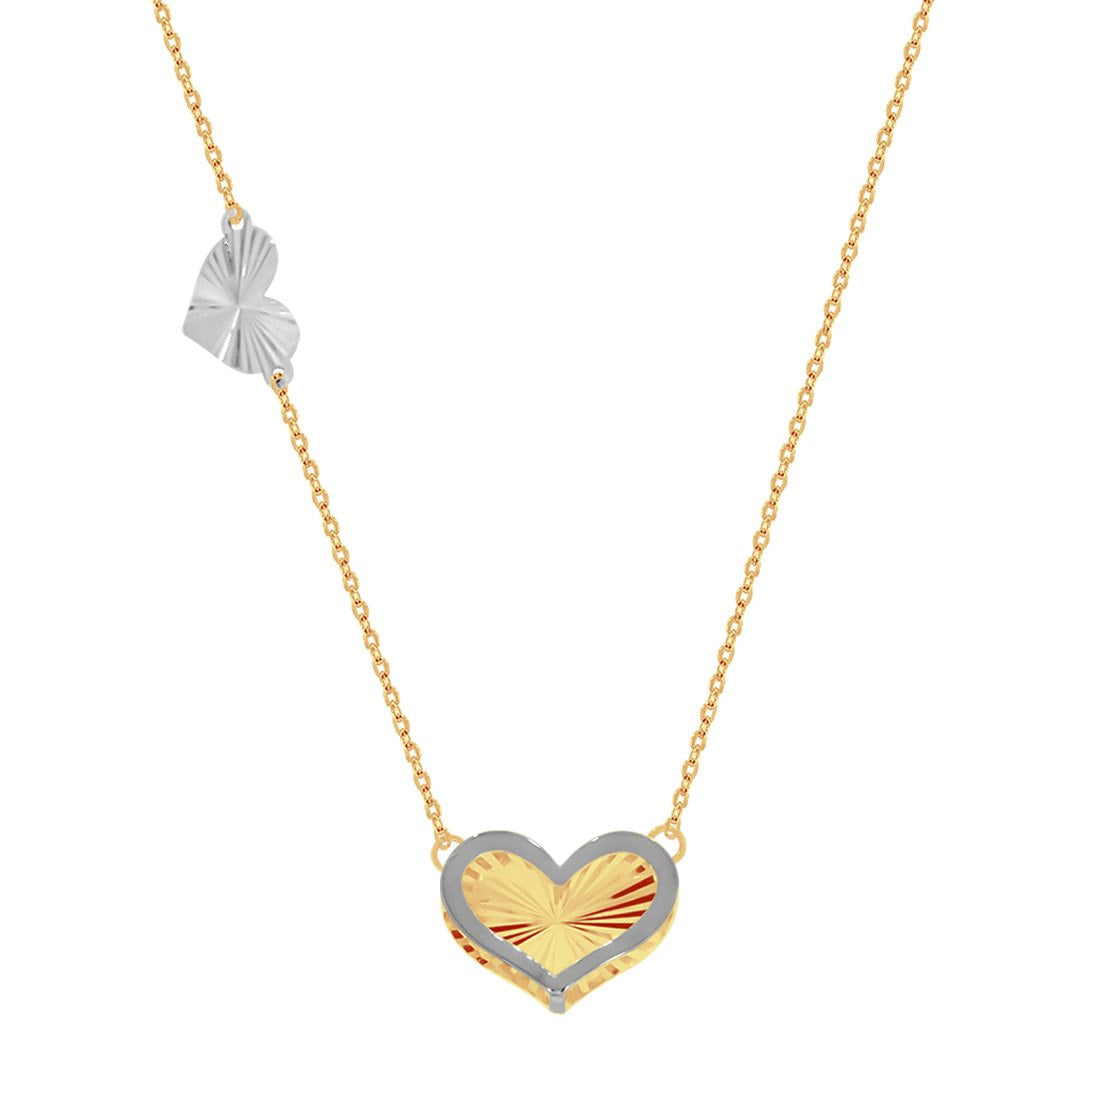 Gargantilla Oro 14k, Corazón con Fondo Diamantado, Cadena 45 cm Largo - Infiniti Joyas